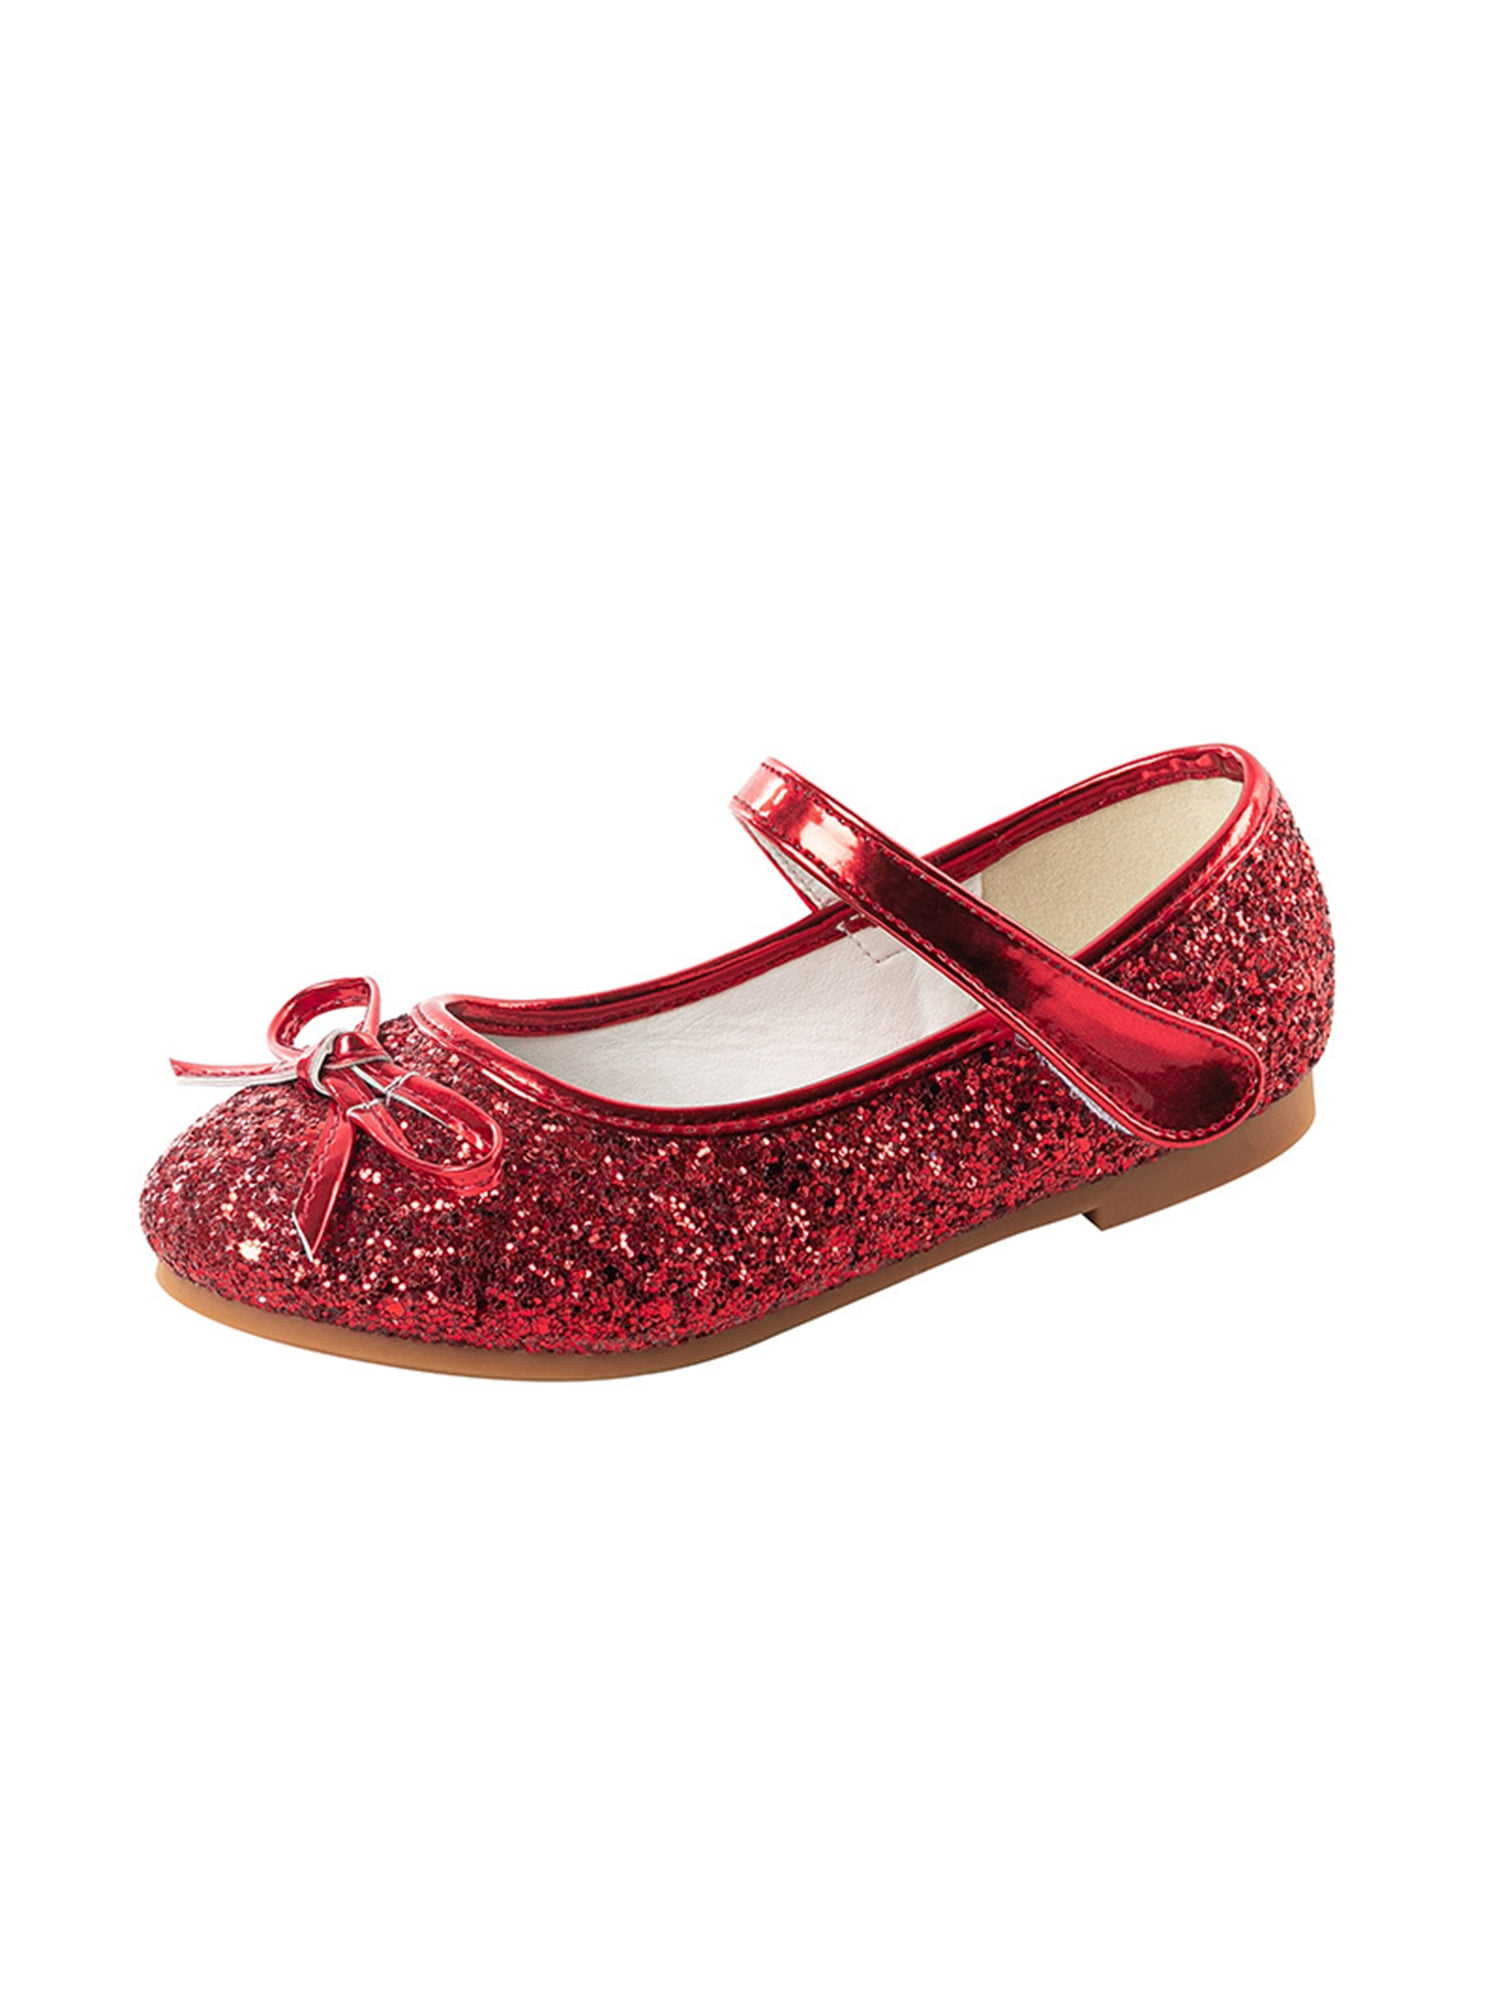 Crocowalk Girls Little Kid Dress Ballet Flats Glitter Ballerina Mary Jane School Wedding Party Flat Shoes Red 10C -